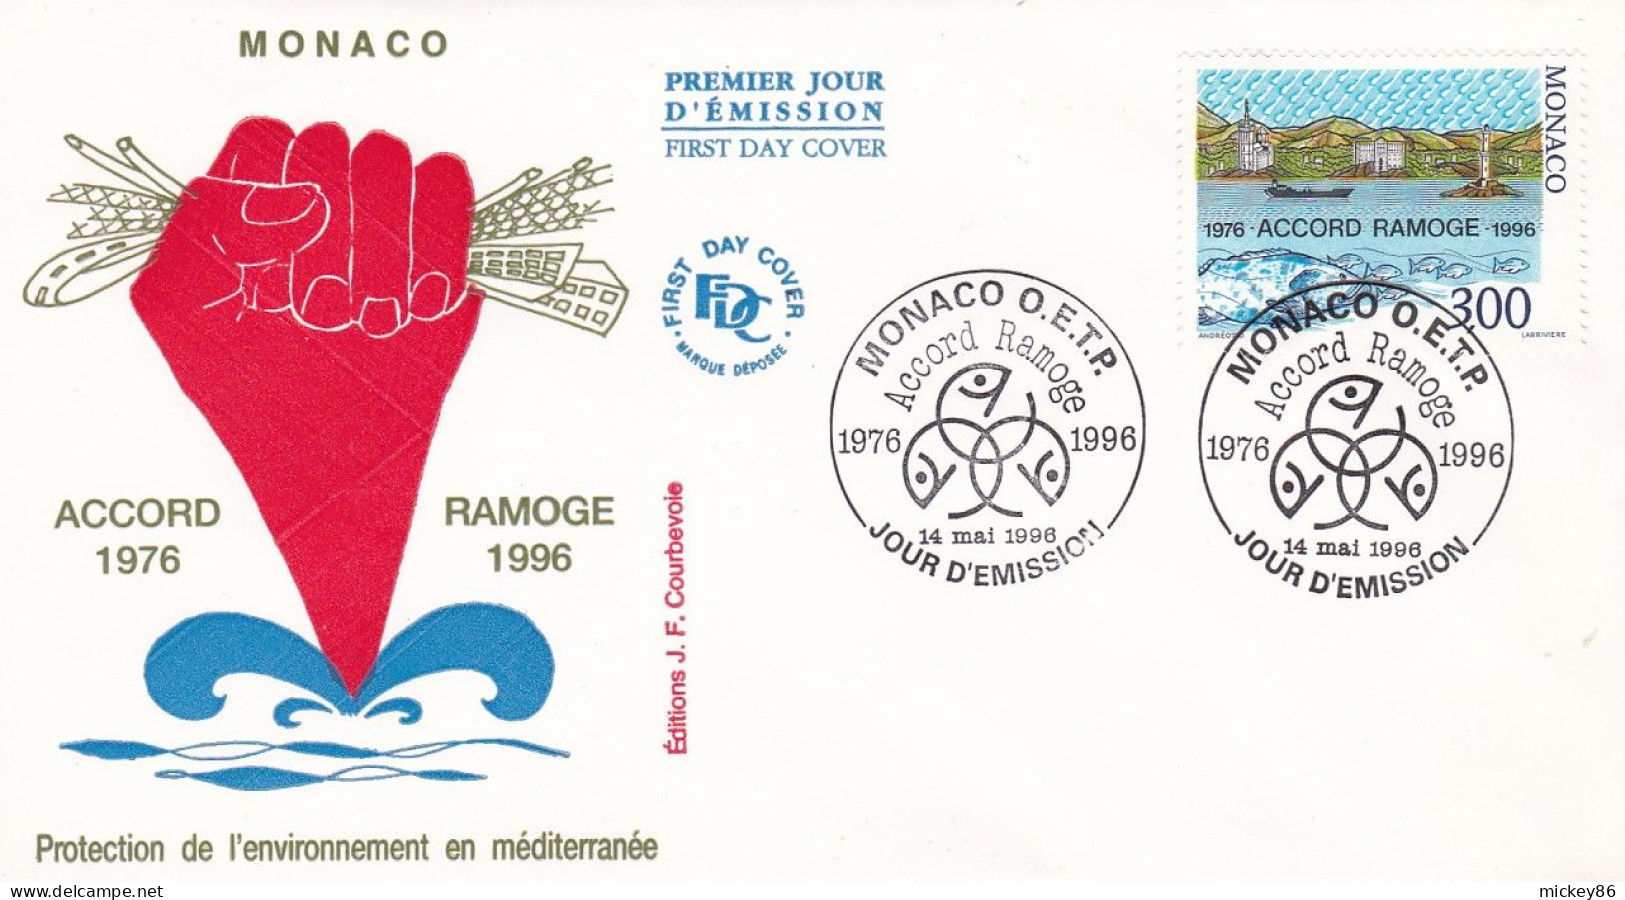 Monaco --FDC--1996 - Accord RAMOGE (protection Environnemental)...........cachet  MONACO  O.E.T.P - FDC